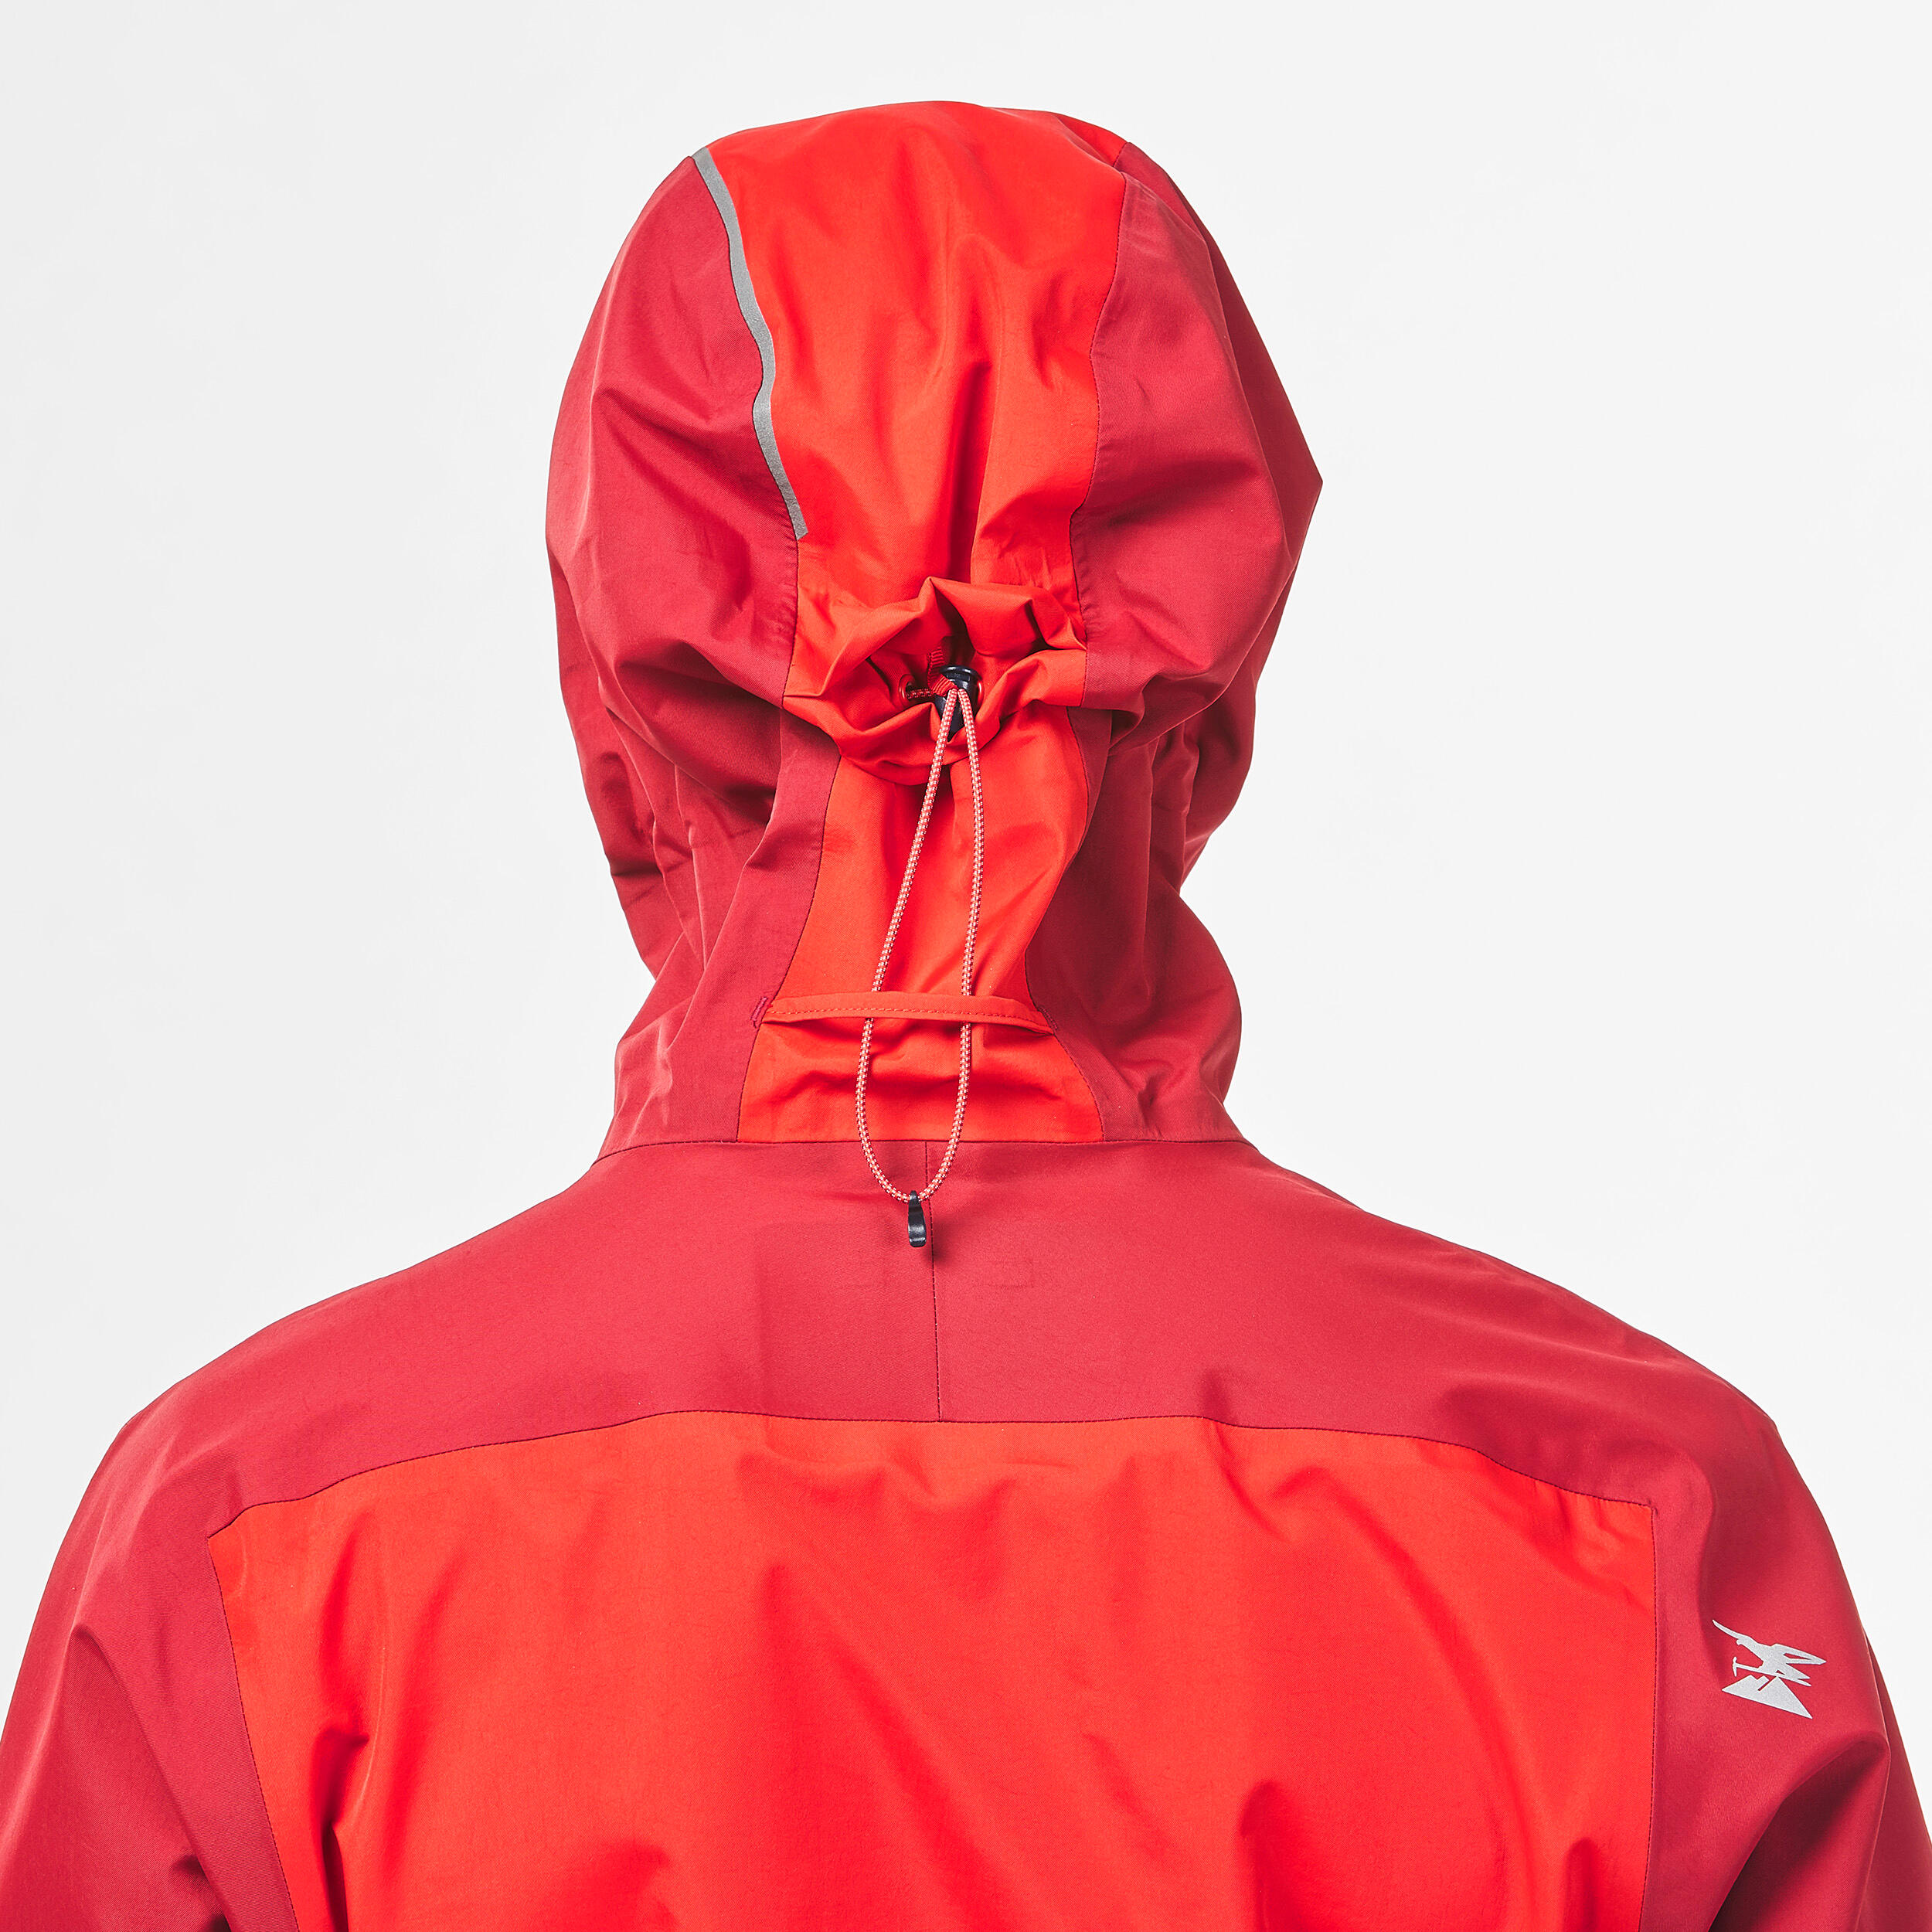 Men’s waterproof durable mountaineering jacket, red 15/17